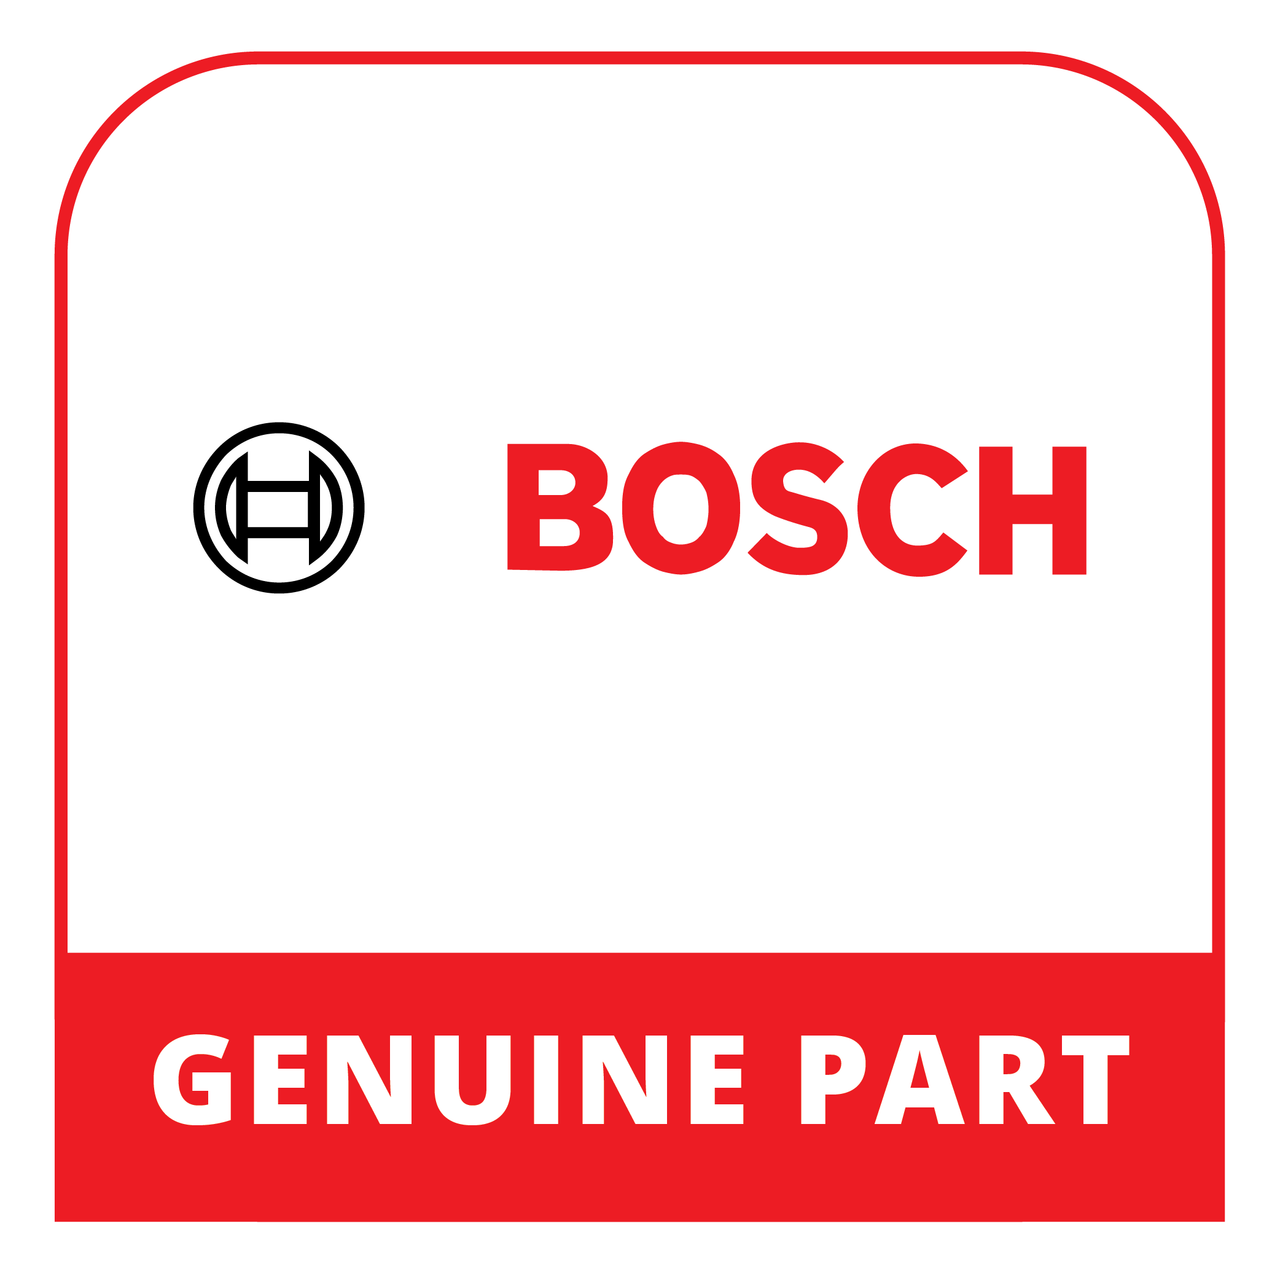 Bosch (Thermador) 23000053 - Glass Ceramic Hob Top - Genuine Bosch (Thermador) Part